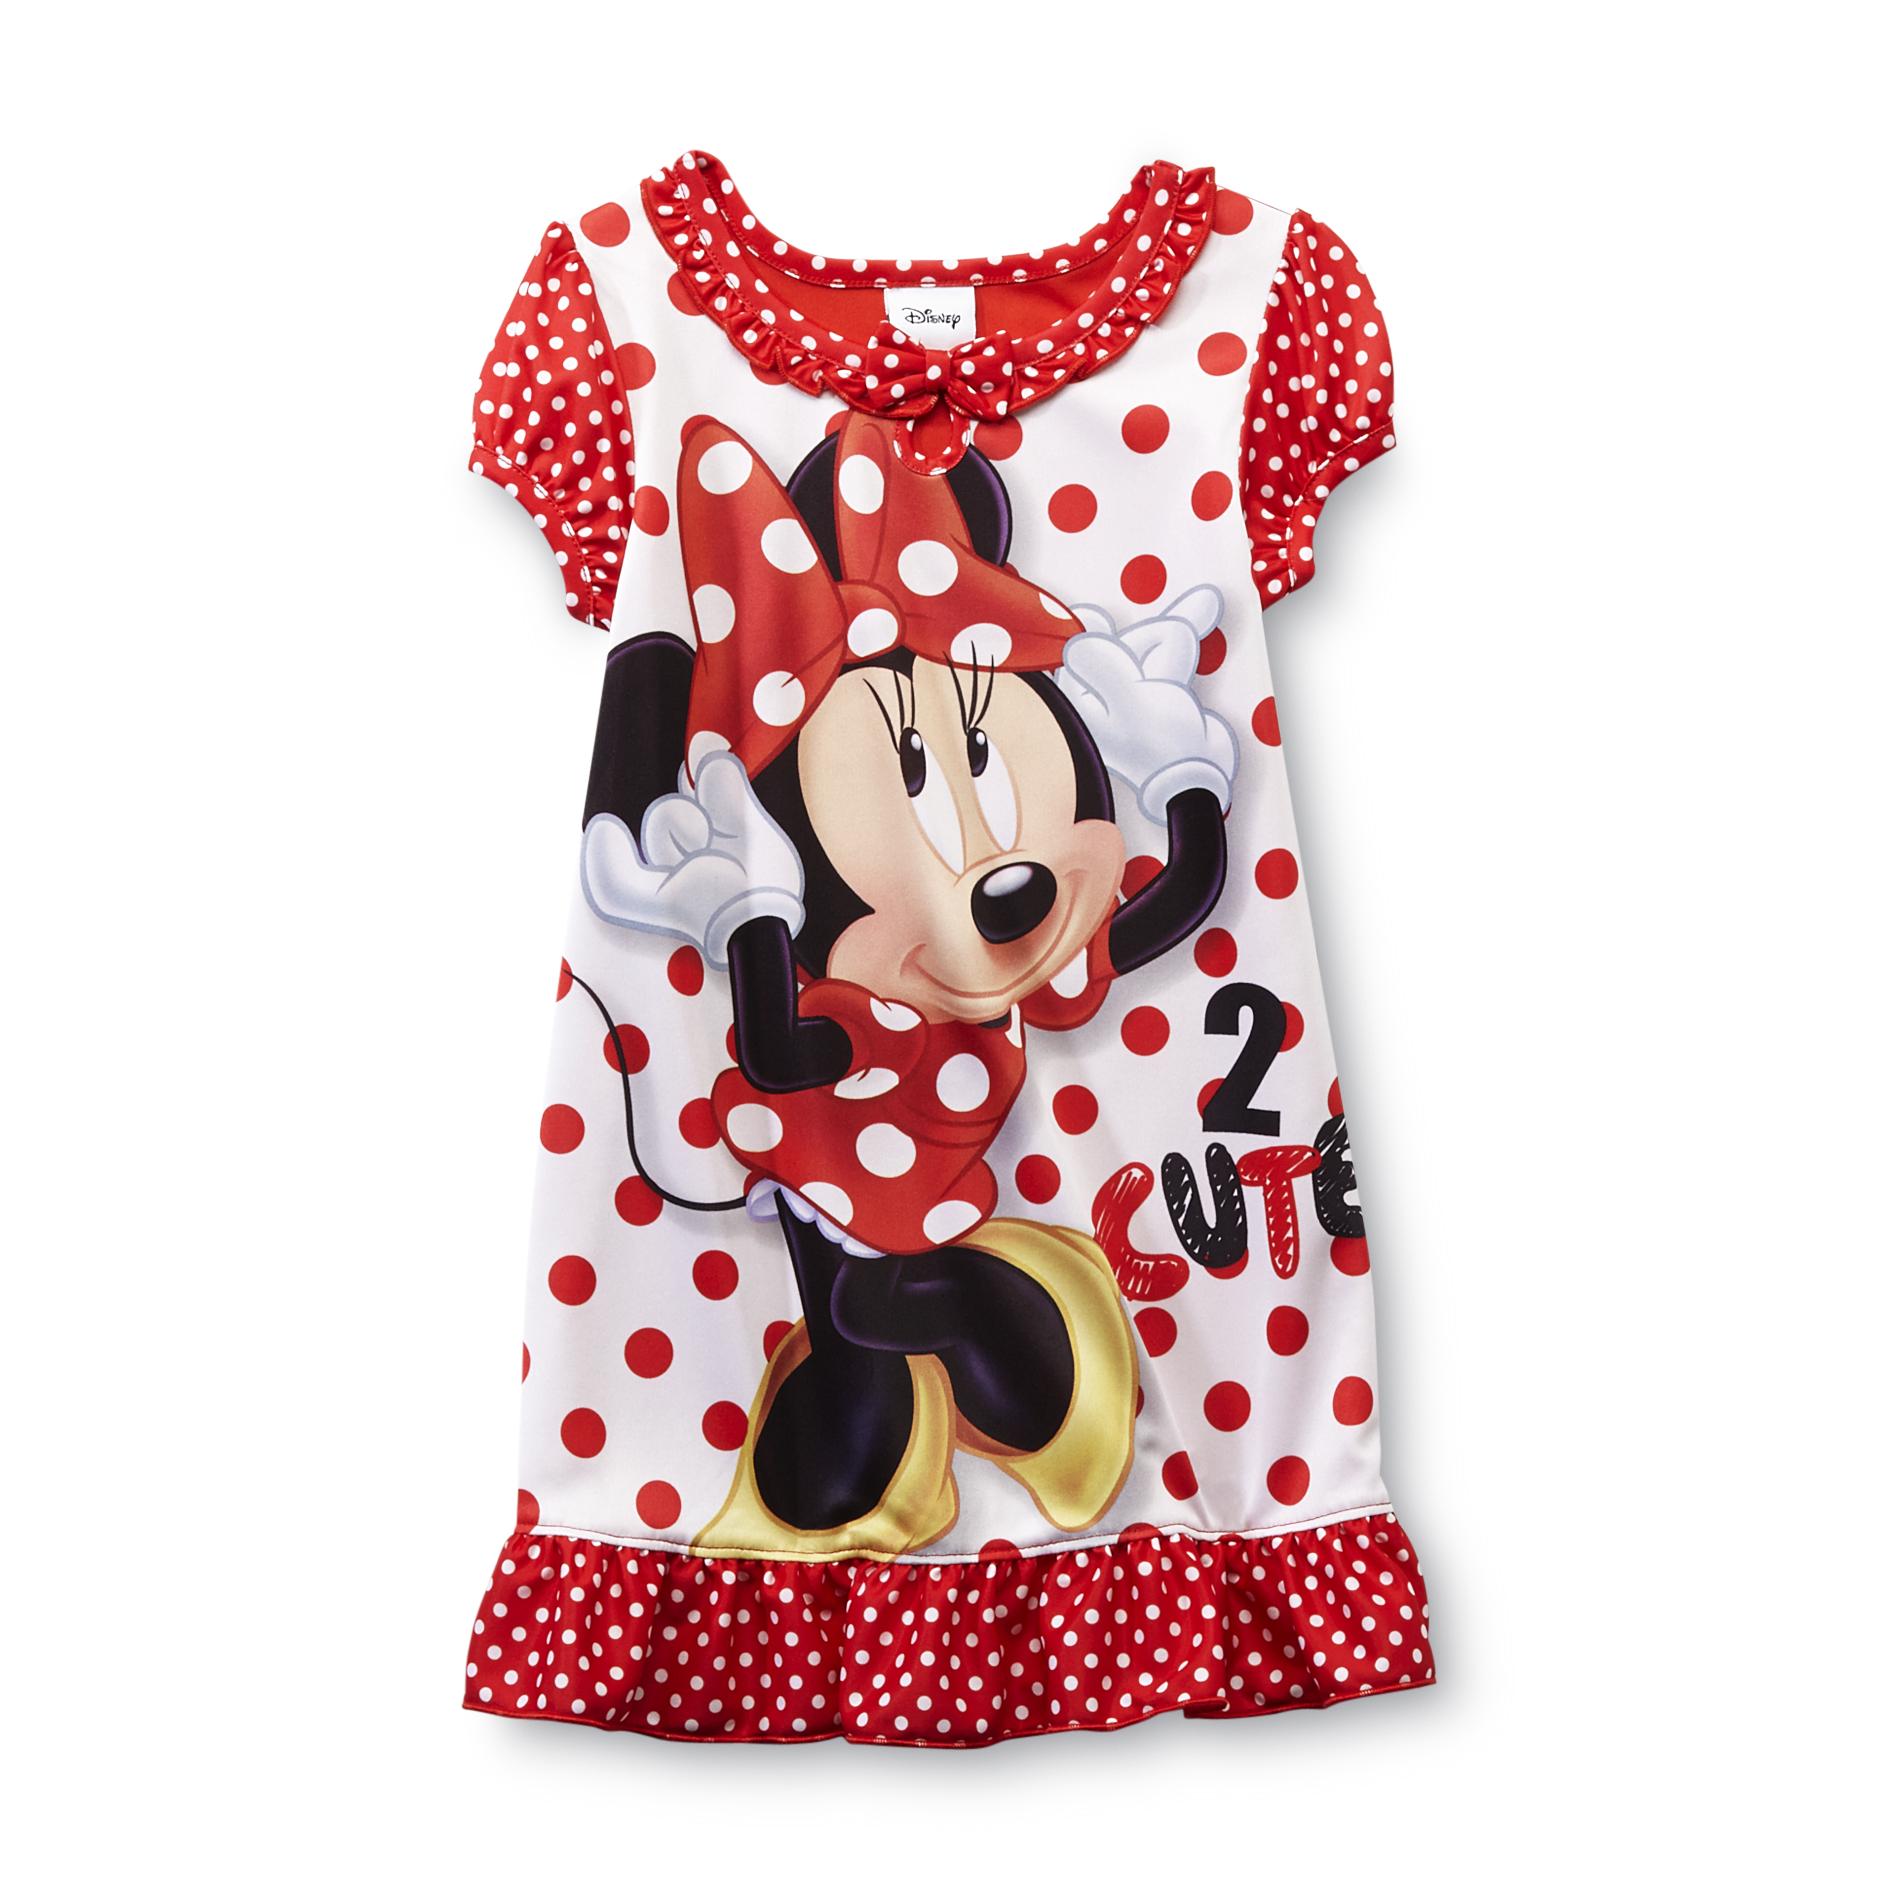 Disney Minnie Mouse Toddler Girl's Nightgown - Polka Dot